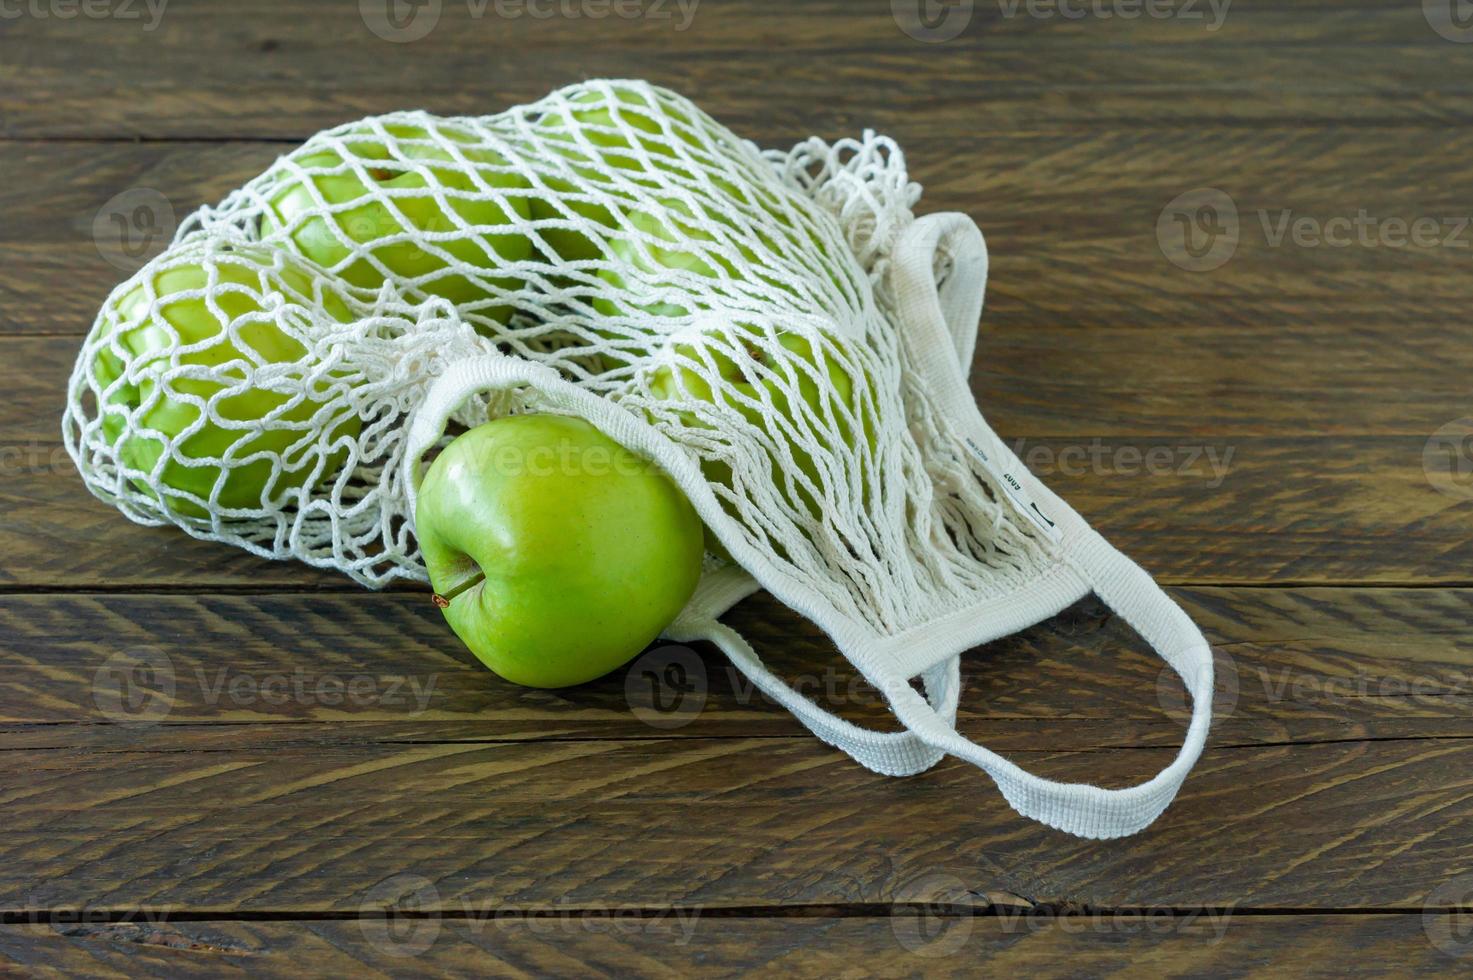 biologisch oma Smith appels in maas textiel zak Aan houten tafel. foto